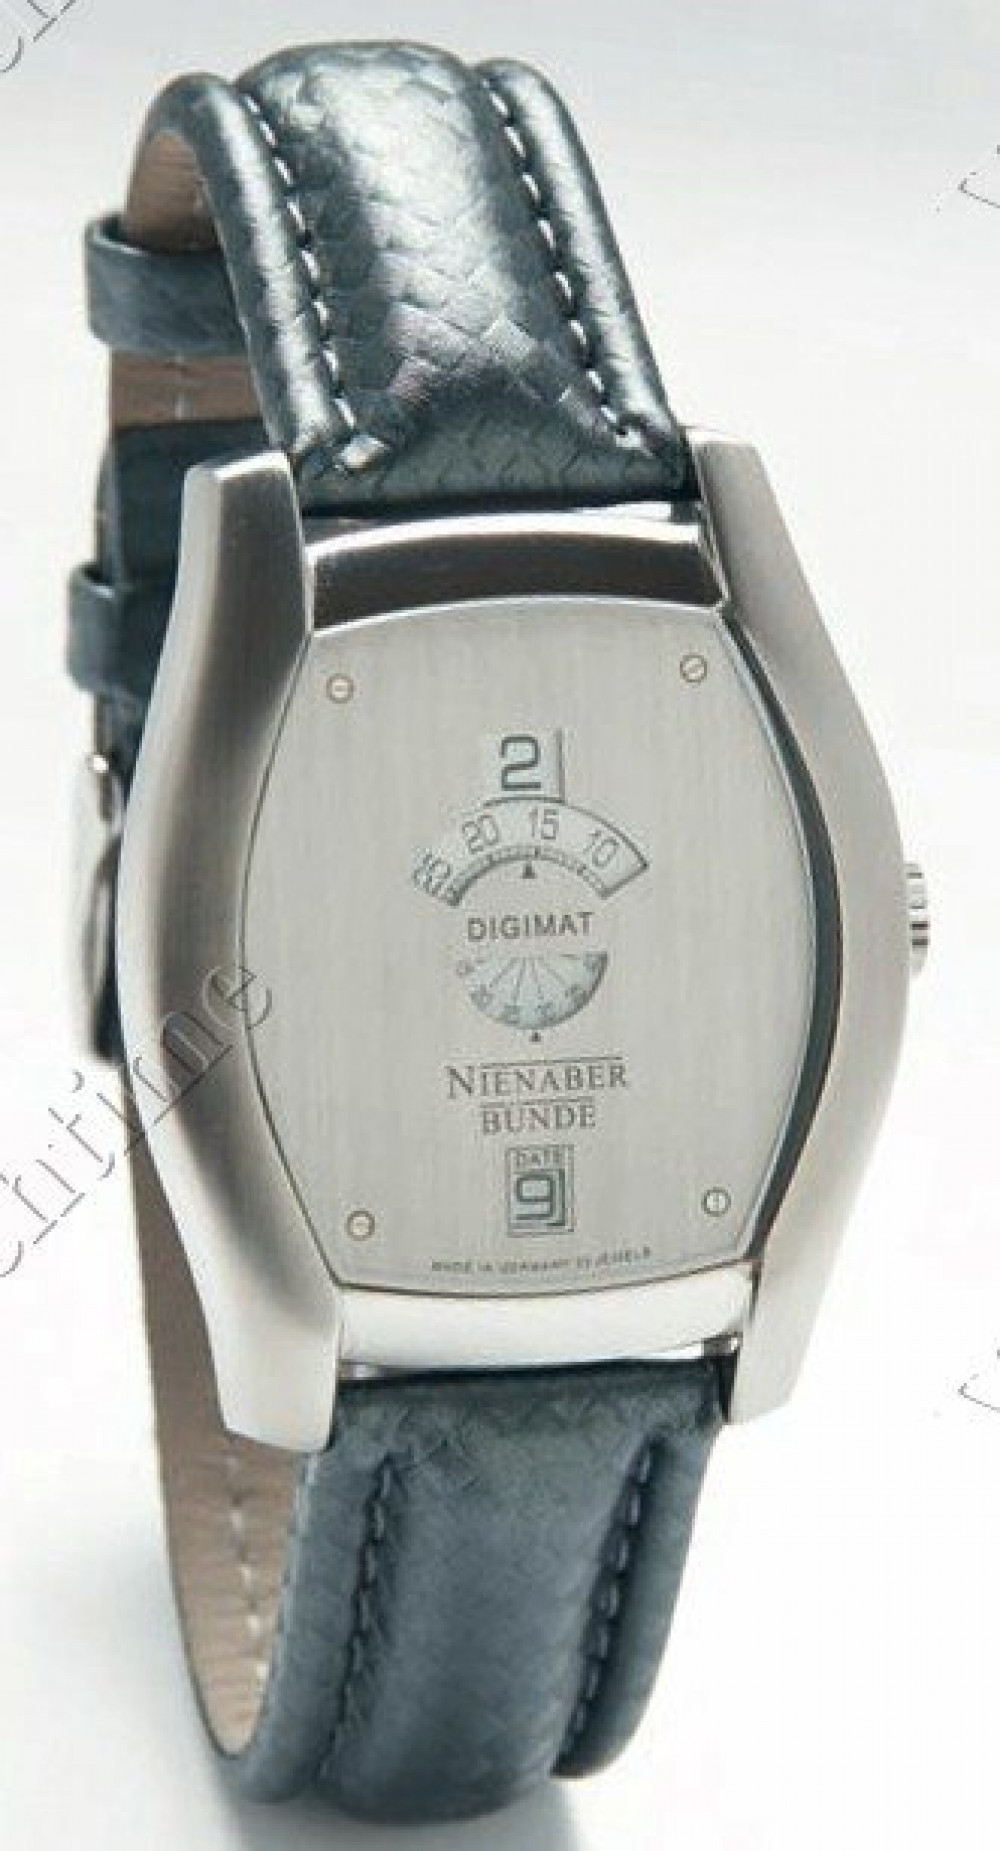 Zegarek firmy Rainer Nienaber, model Digimat